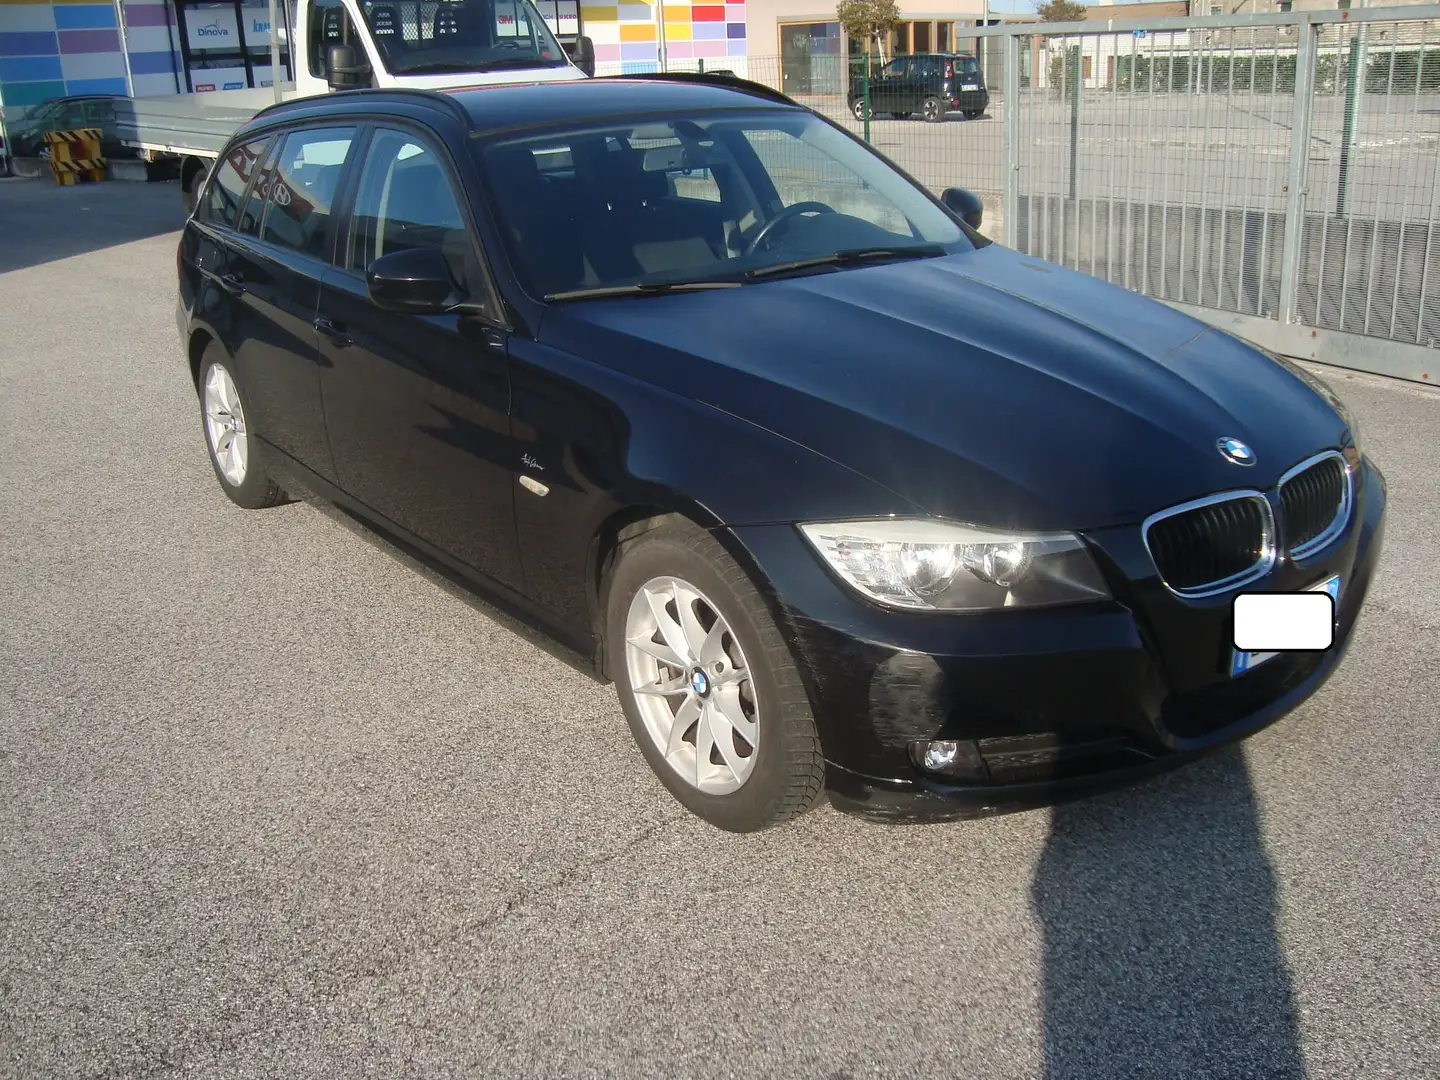 usato BMW 320 Station wagon a San Vendemiano - Treviso - Tv per € 6.800,-